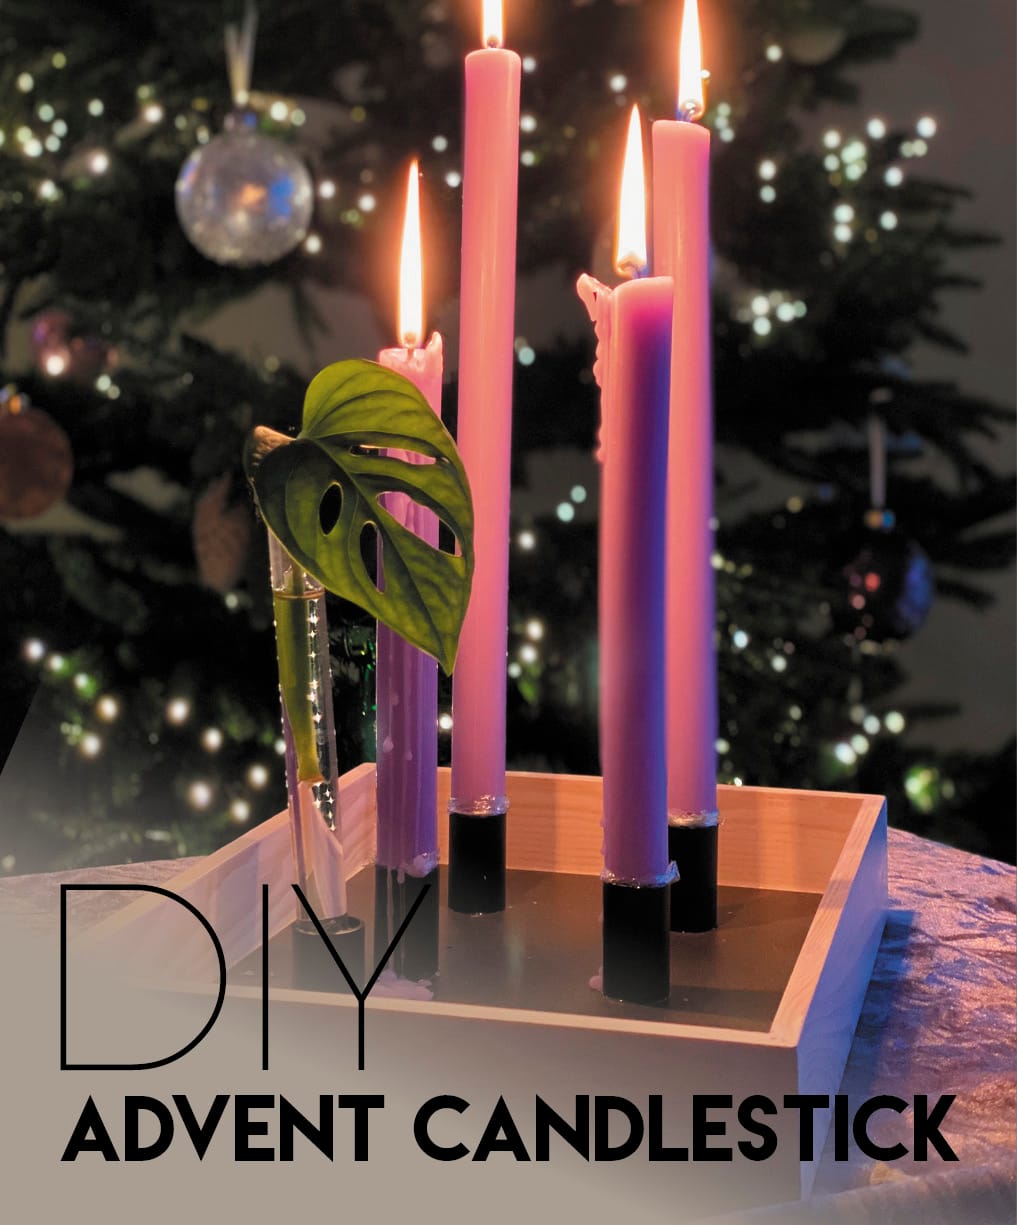 DIY Advent Candlestick